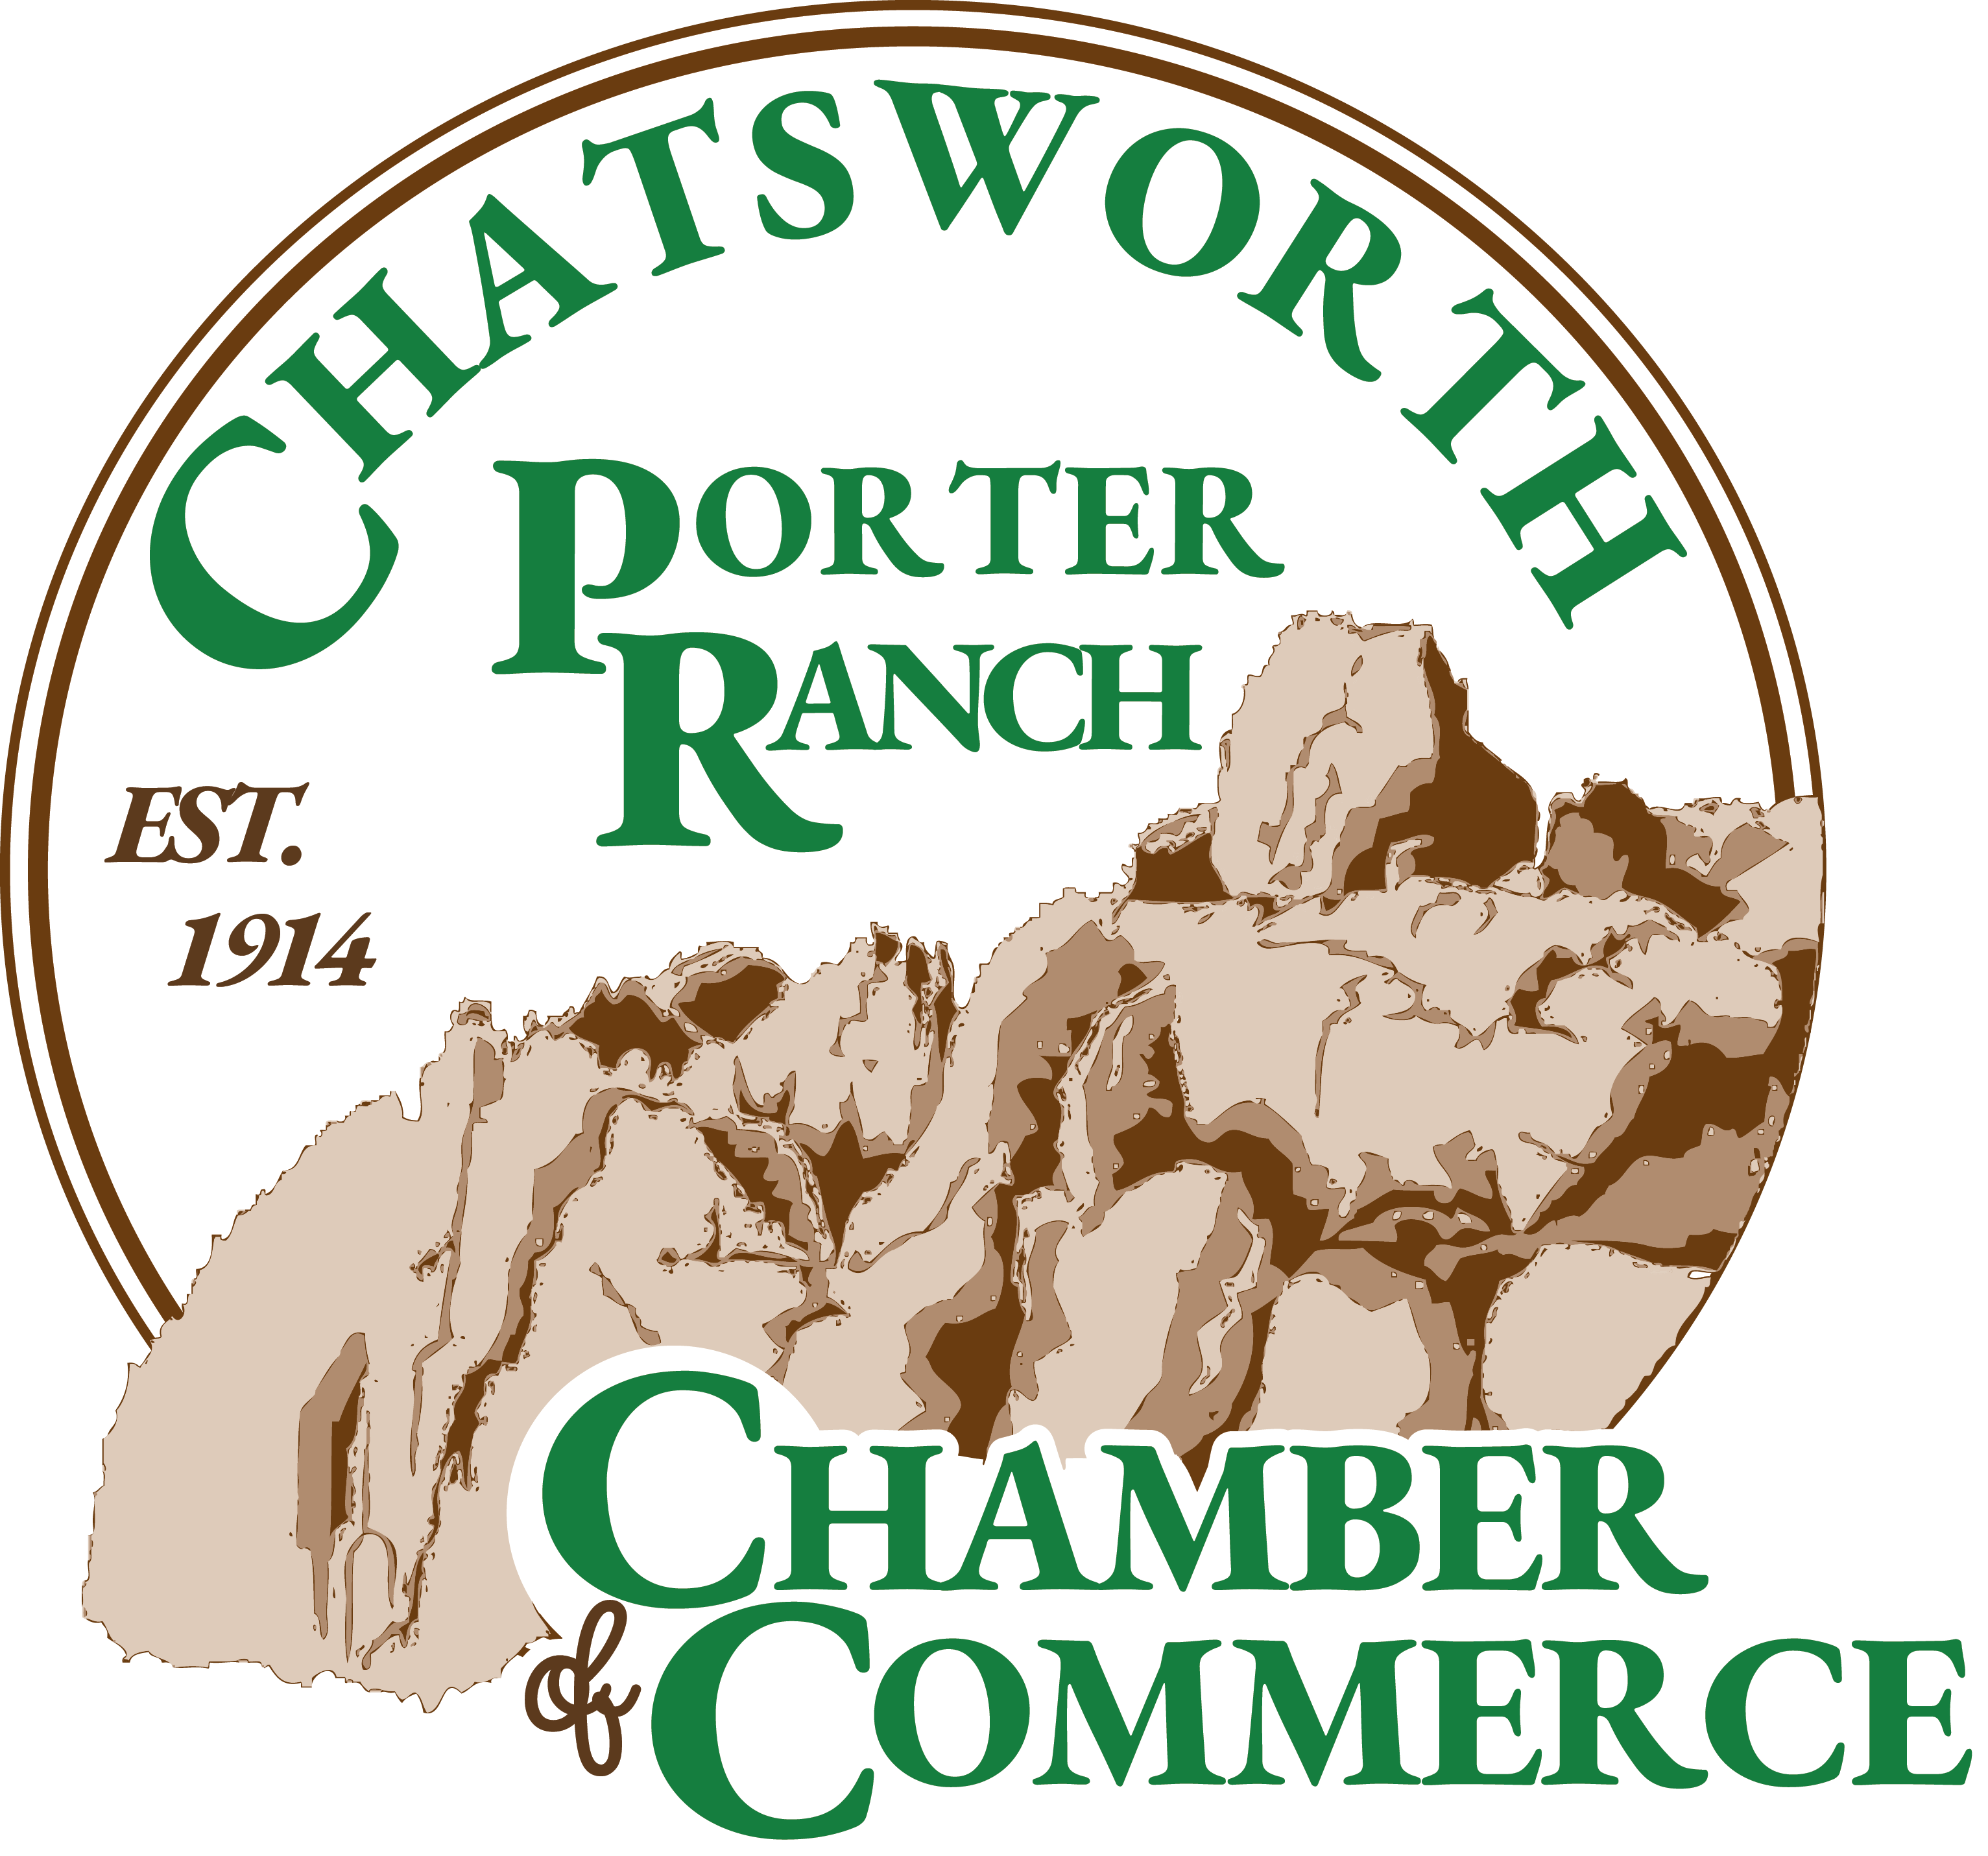 Chatsworth Porter Ranch Chamber of Commerce Logo